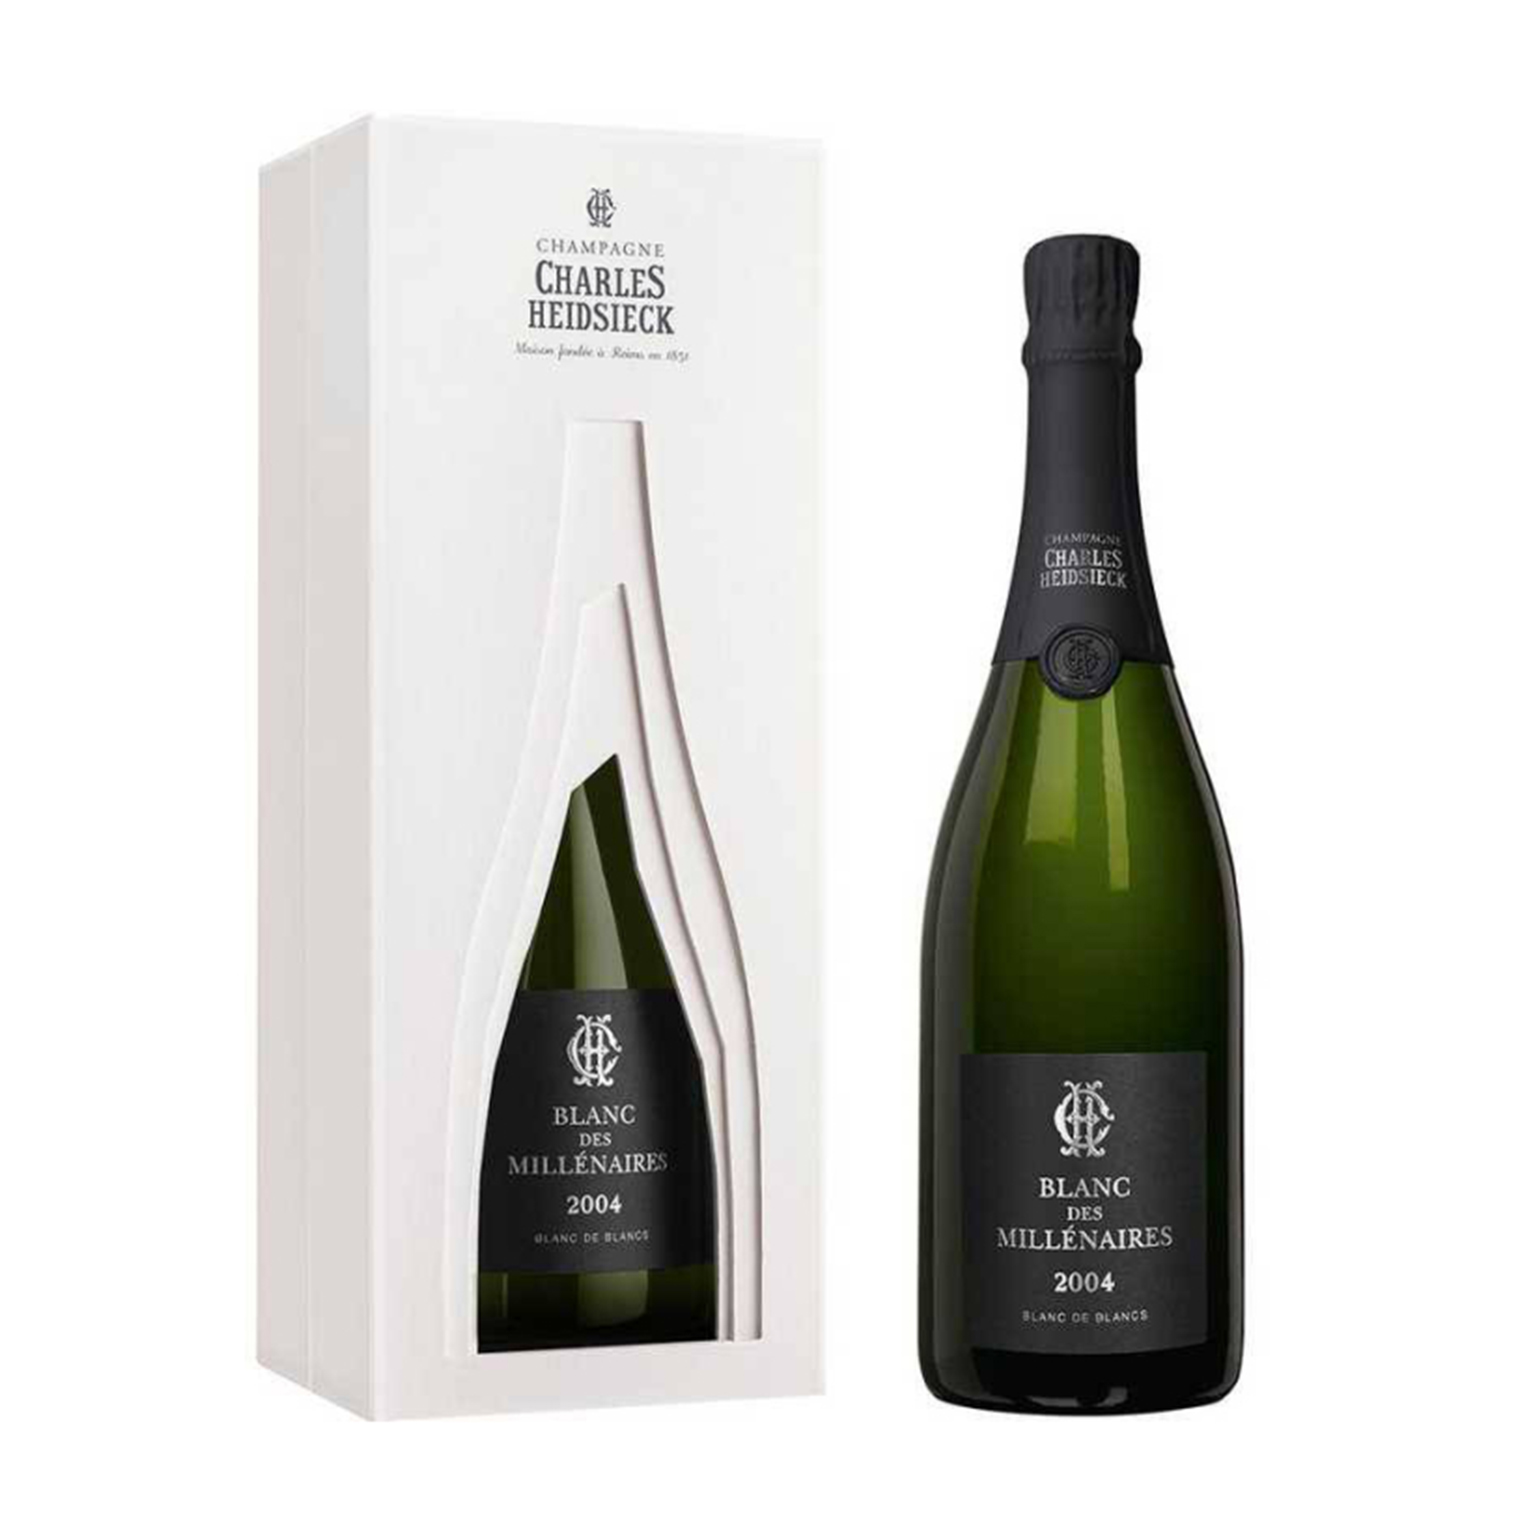 Rượu sâm panh Champagne Charles Heidsieck Blanc Des Millénaires 2006